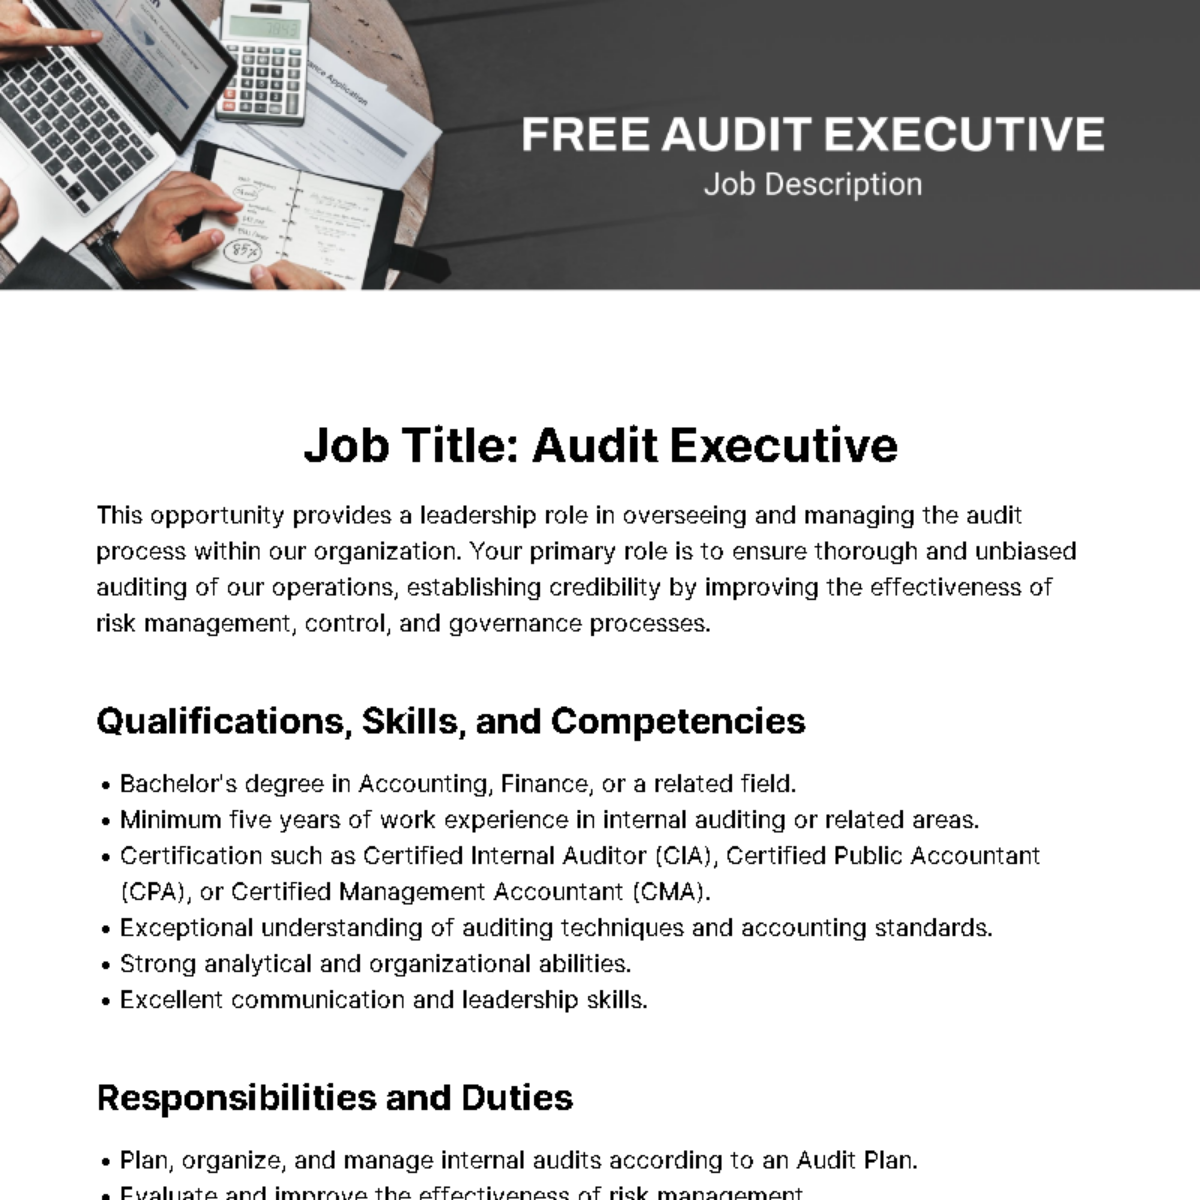 Free Audit Executive Job Description Template